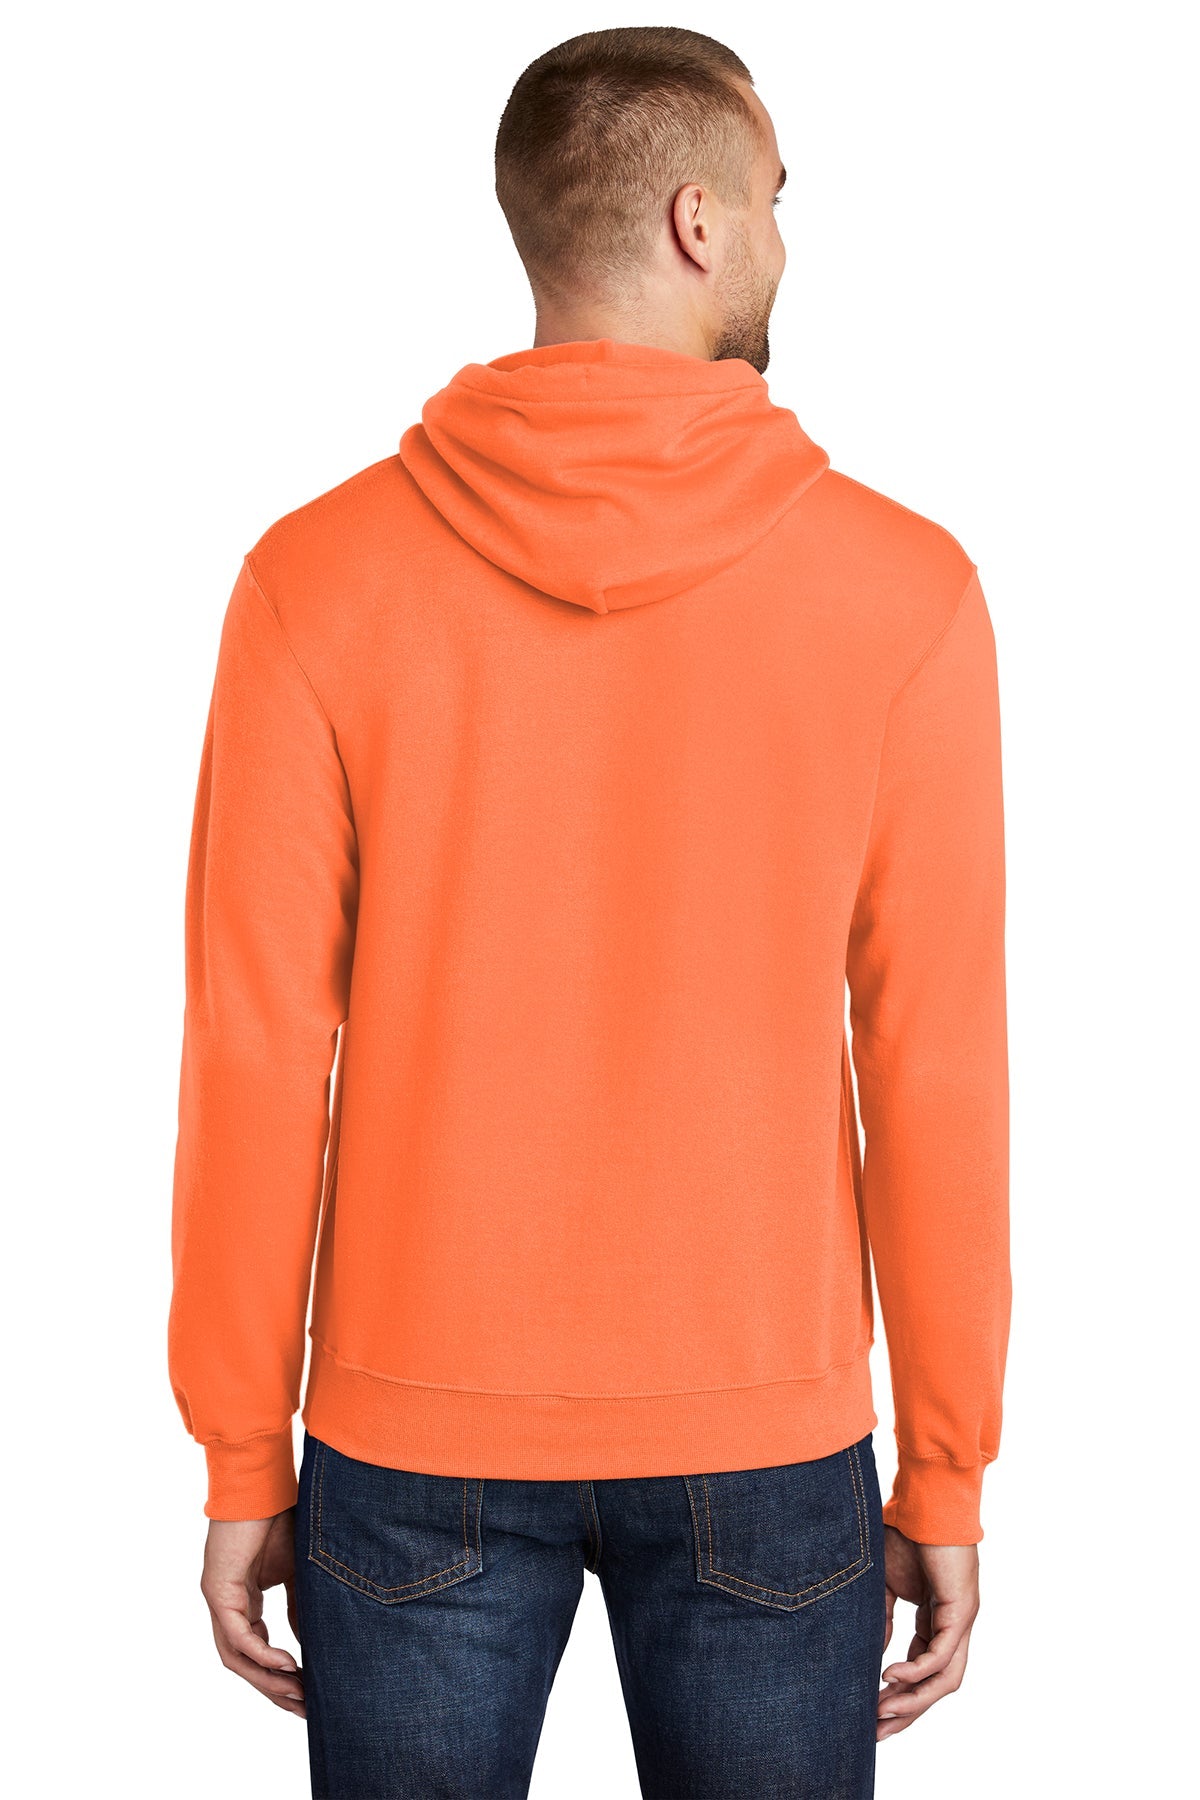 port & company_pc78h _neon orange_company_logo_sweatshirts